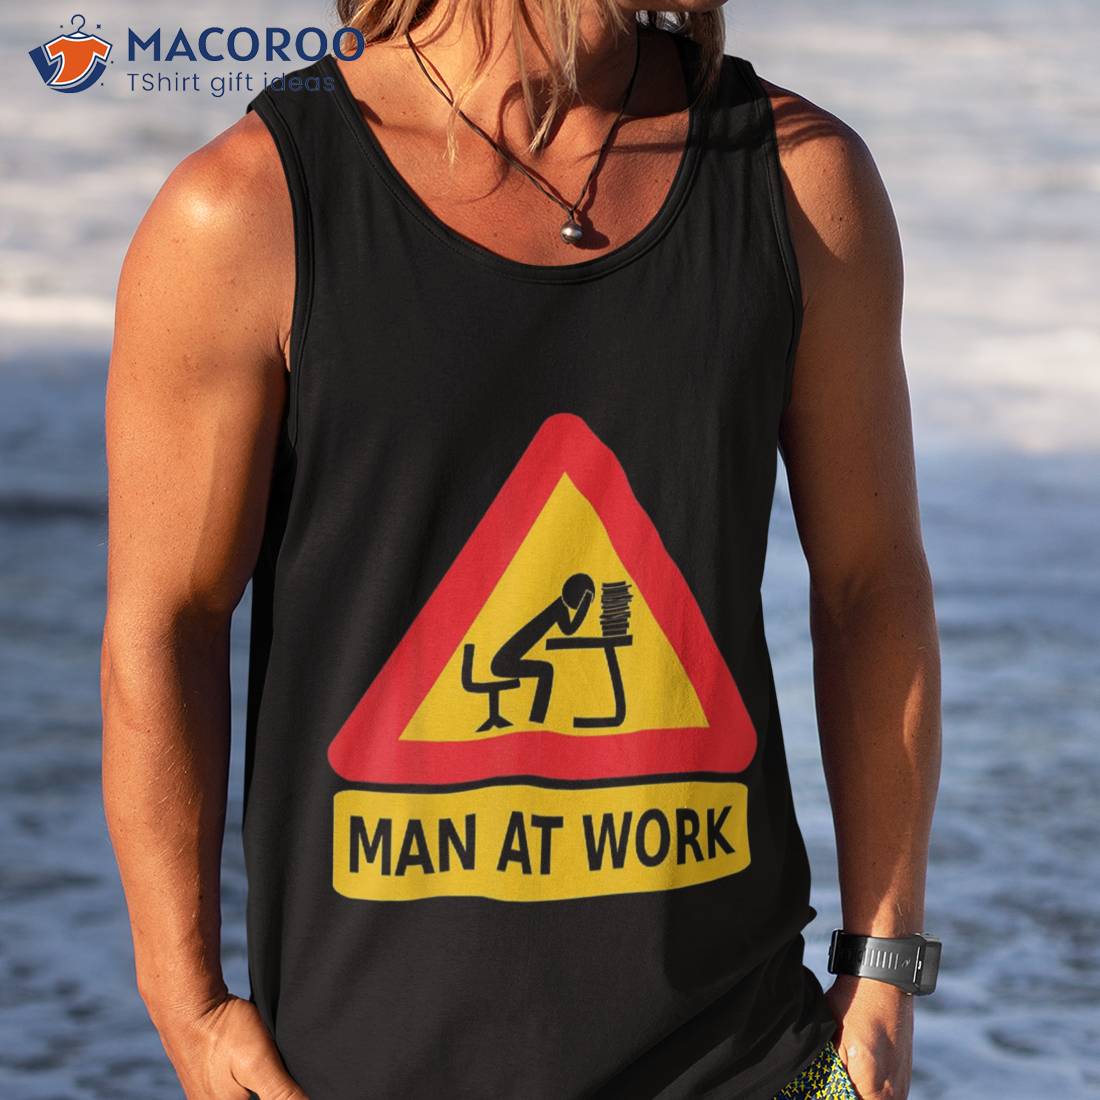 https://images.macoroo.com/wp-content/uploads/2023/04/lazy-man-at-work-funny-caution-i-hate-work-sucks-hating-job-shirt-tank-top.jpg